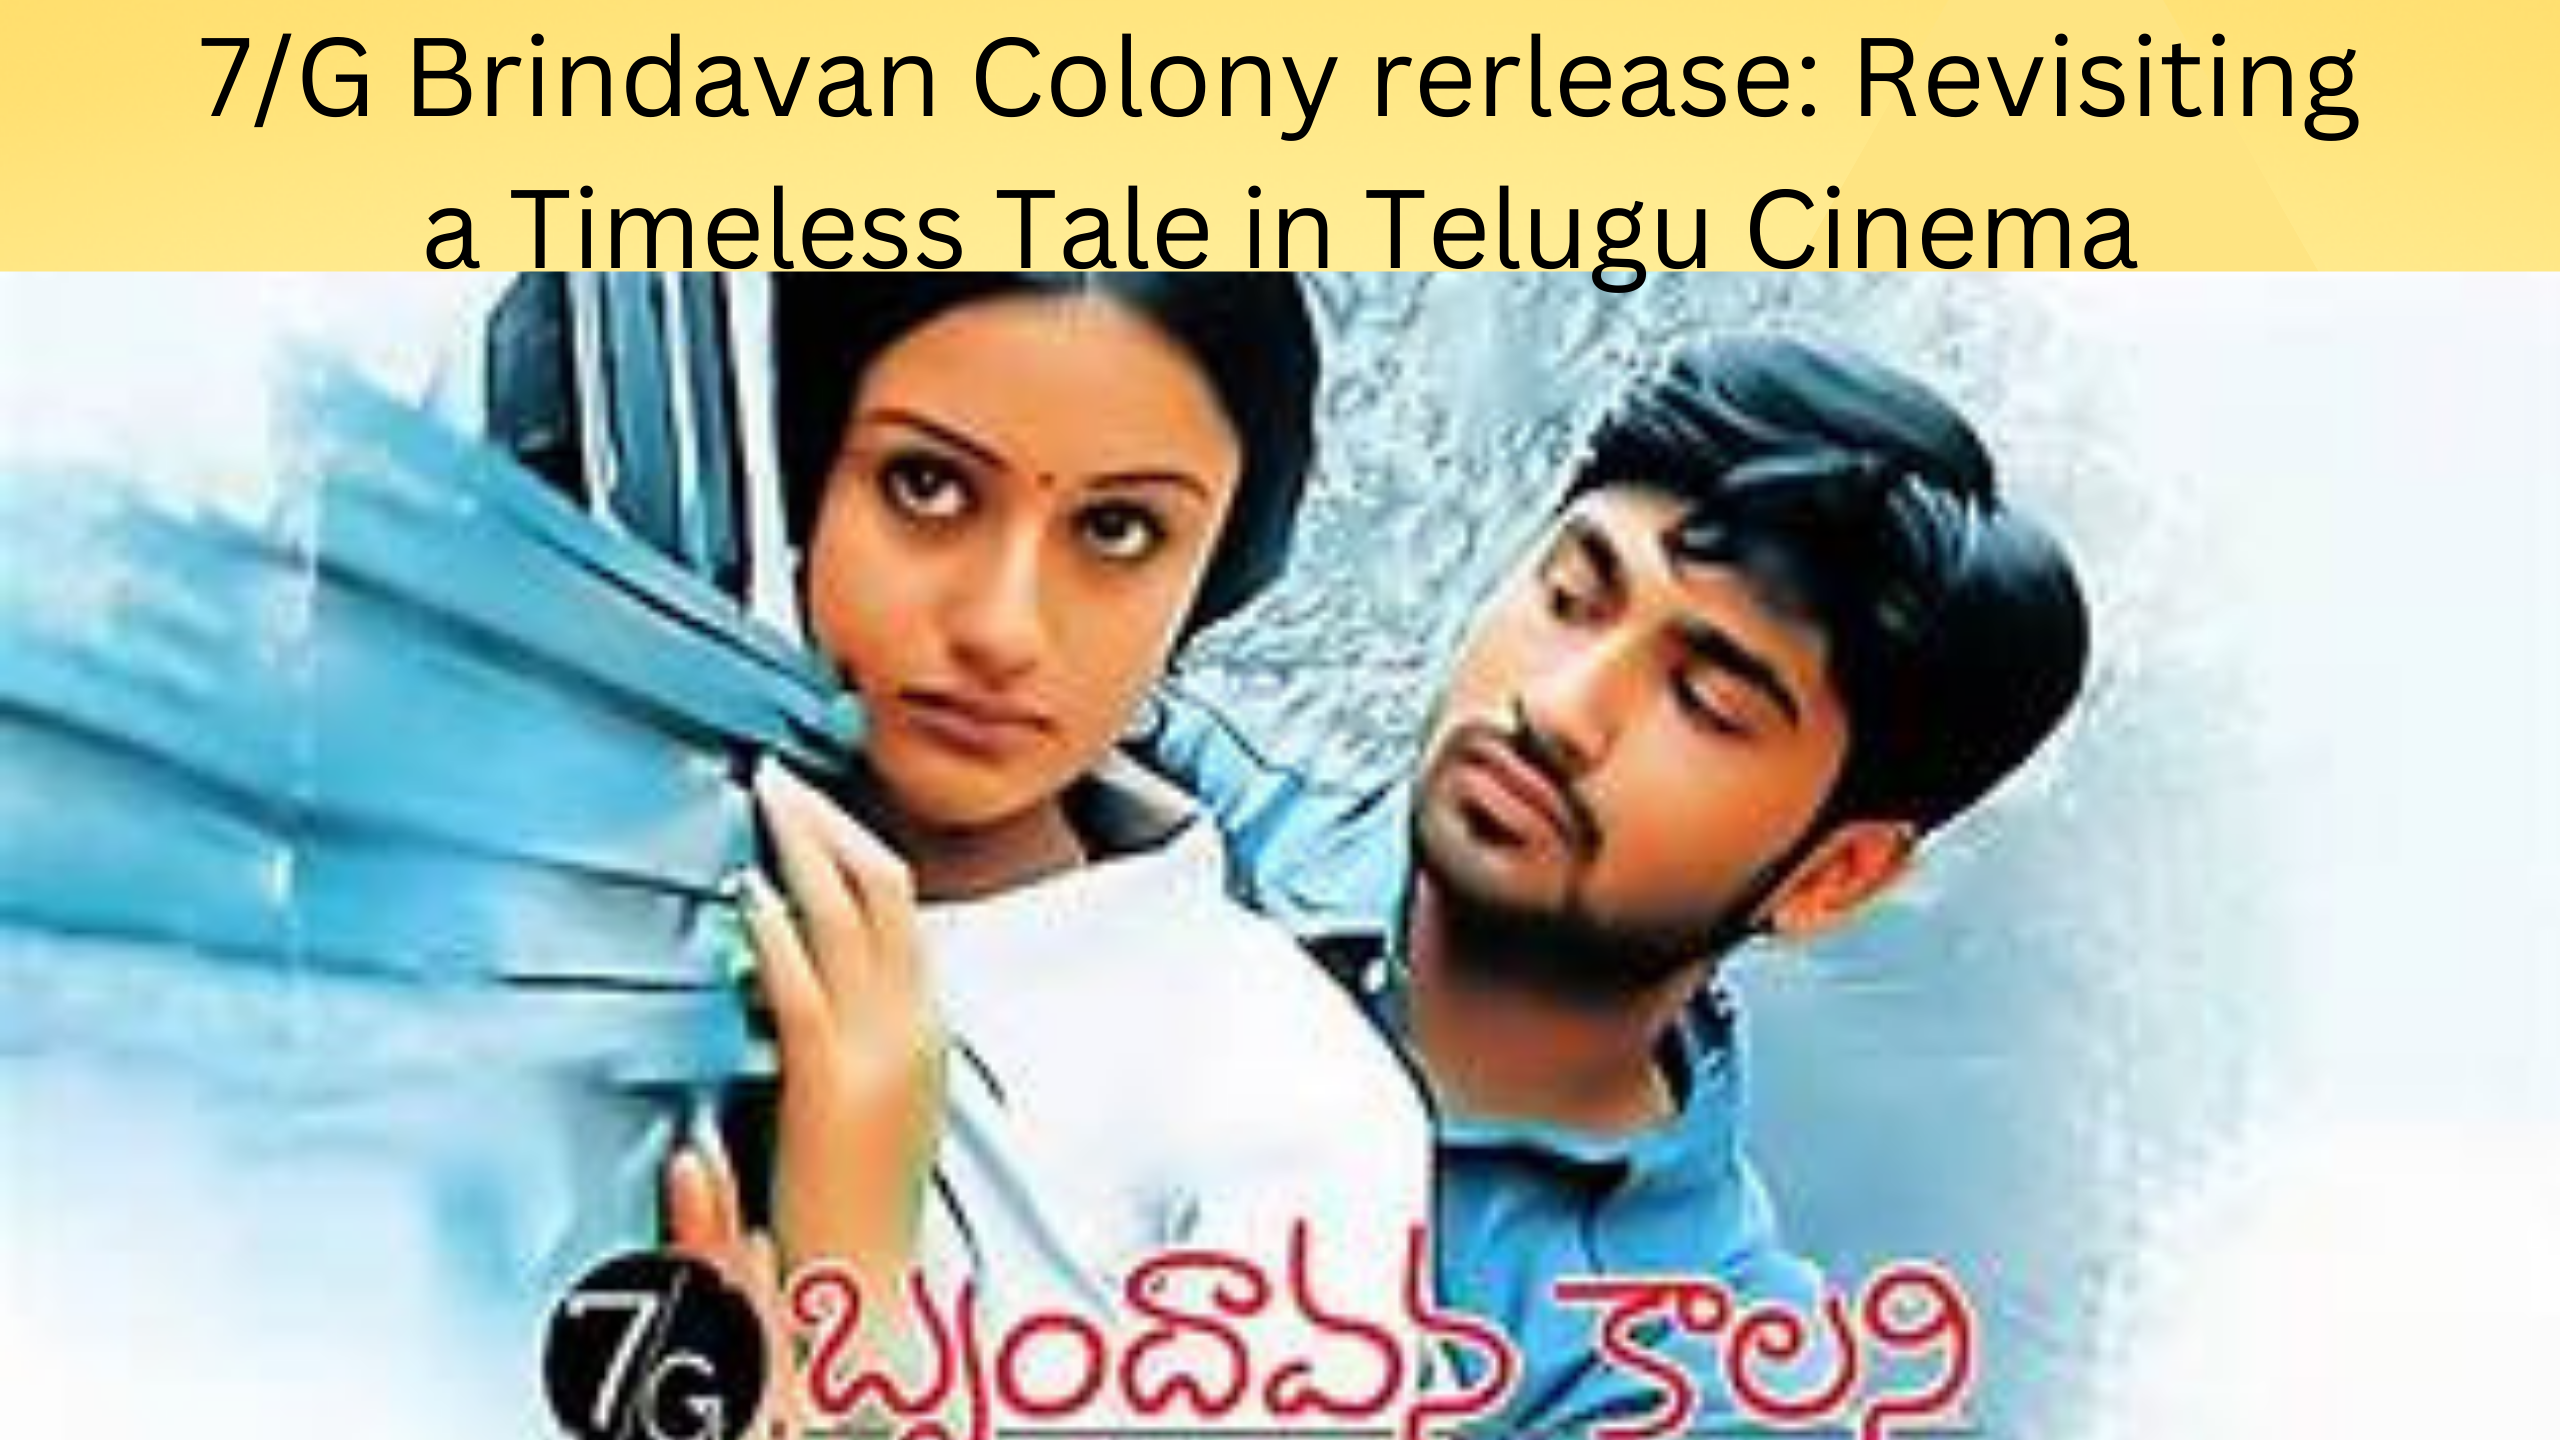 7/G Brindavan Colony: Revisiting a Timeless Tale in Telugu Cinema